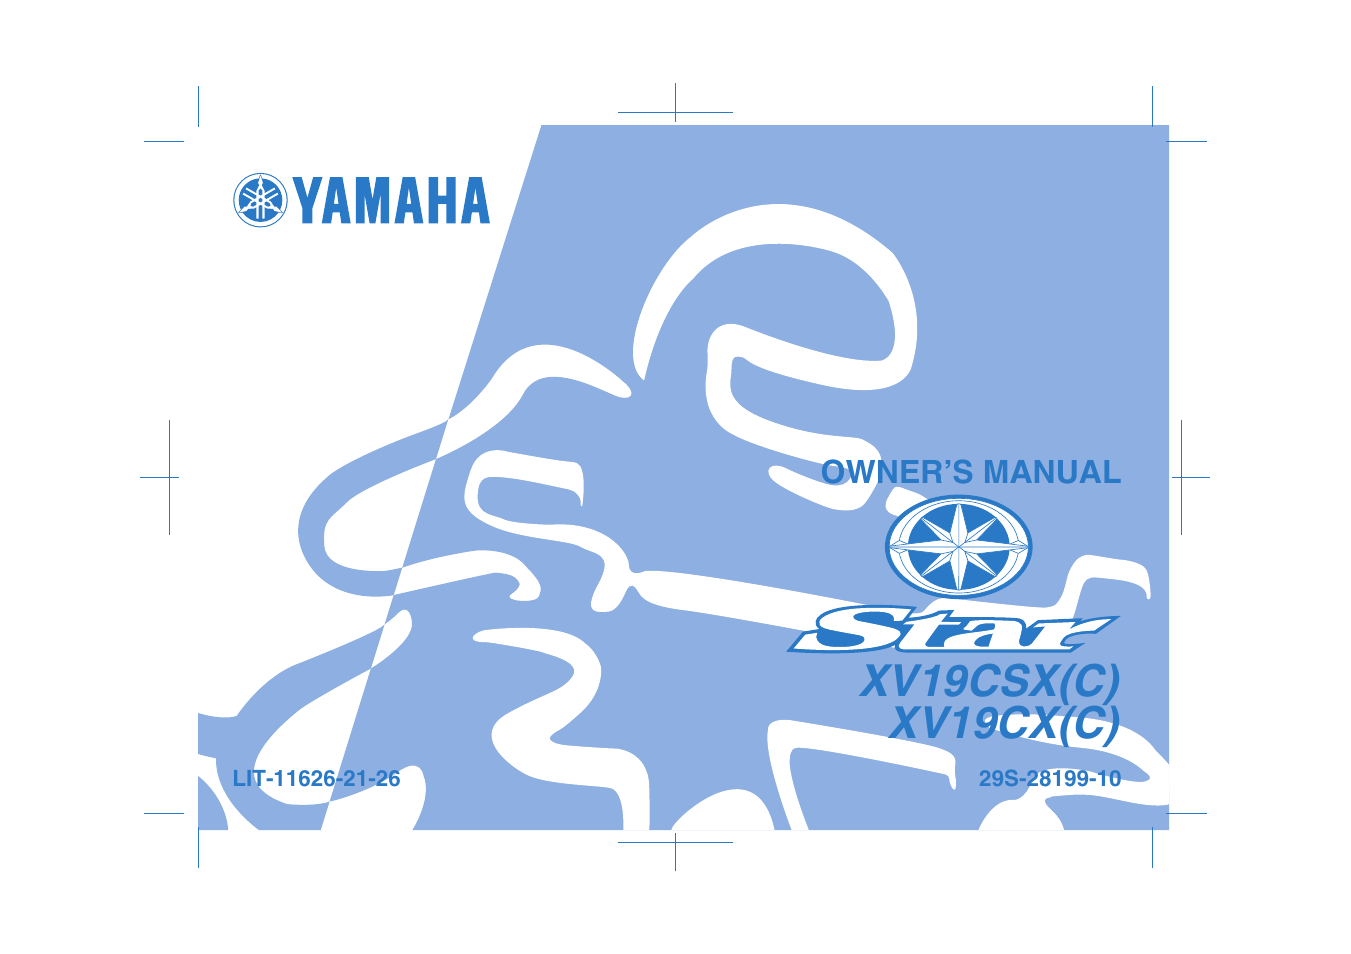 Yamaha STAR XV19CX(C) User Manual | 96 pages